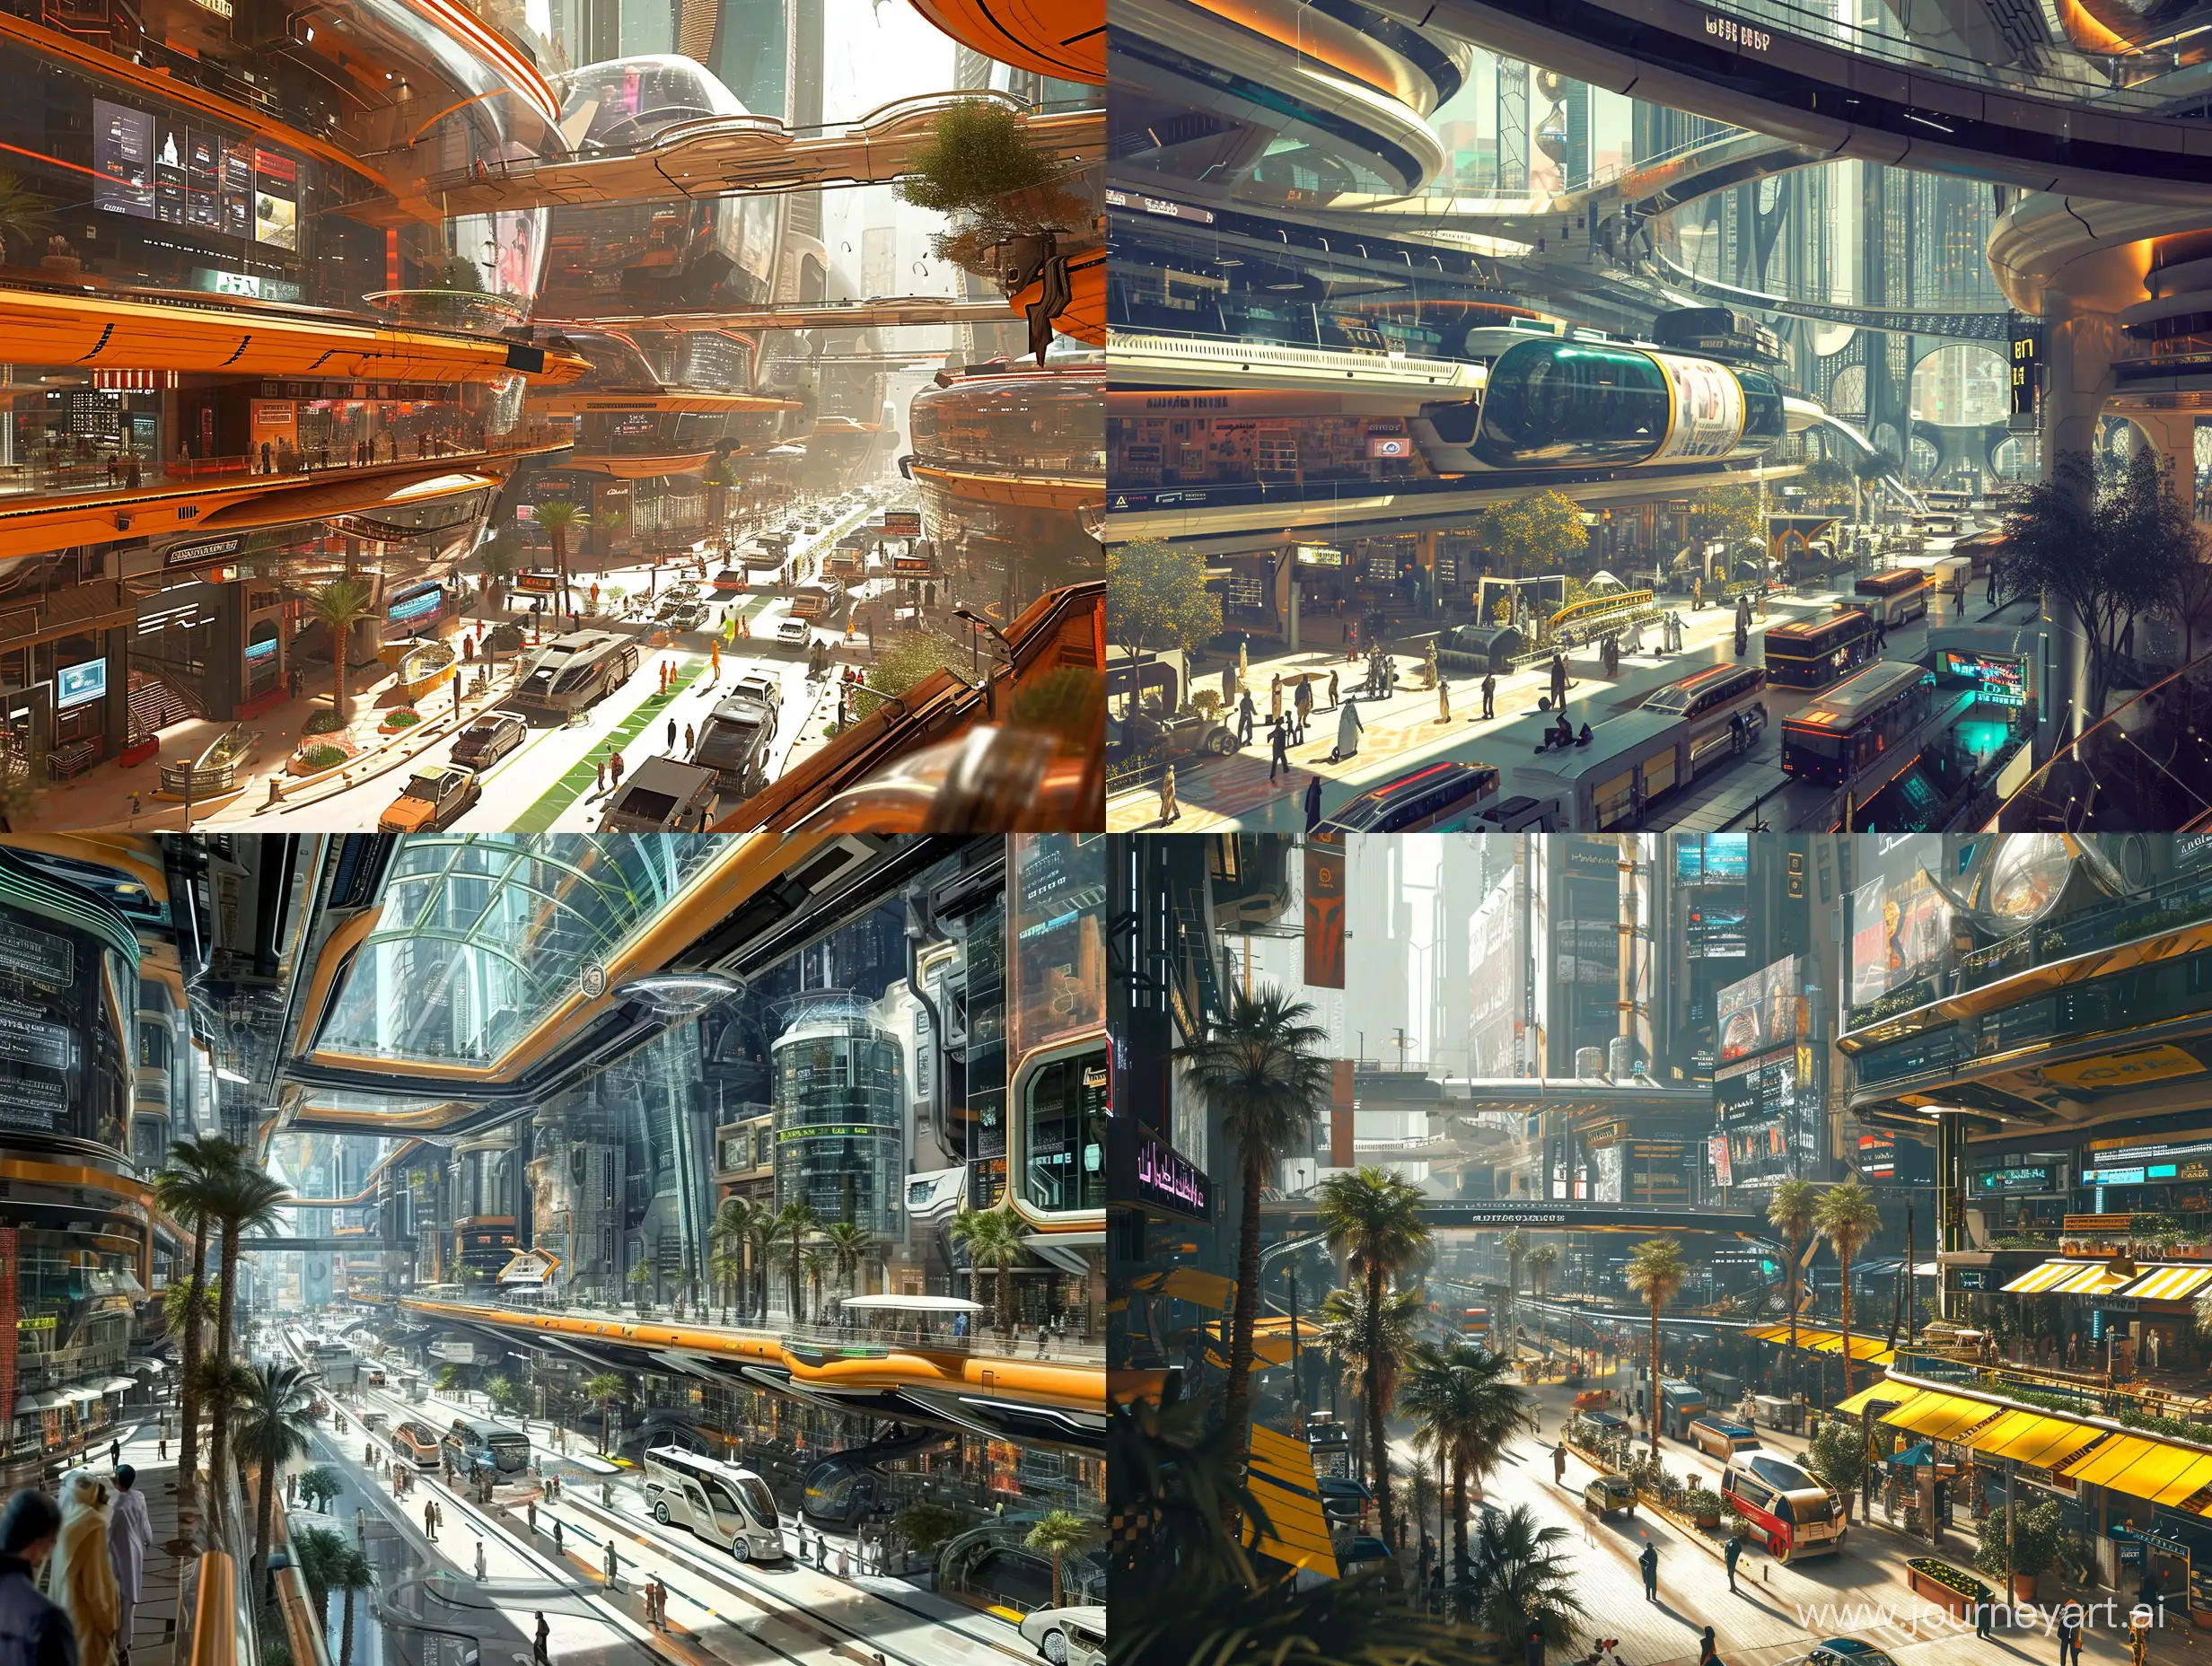 inside of a Futuristic city, gitpunk, dubai city, detailed to precise, sci fi, modern, busy environment, naturalism, vibrant, transportation, cinematic, visuals,

